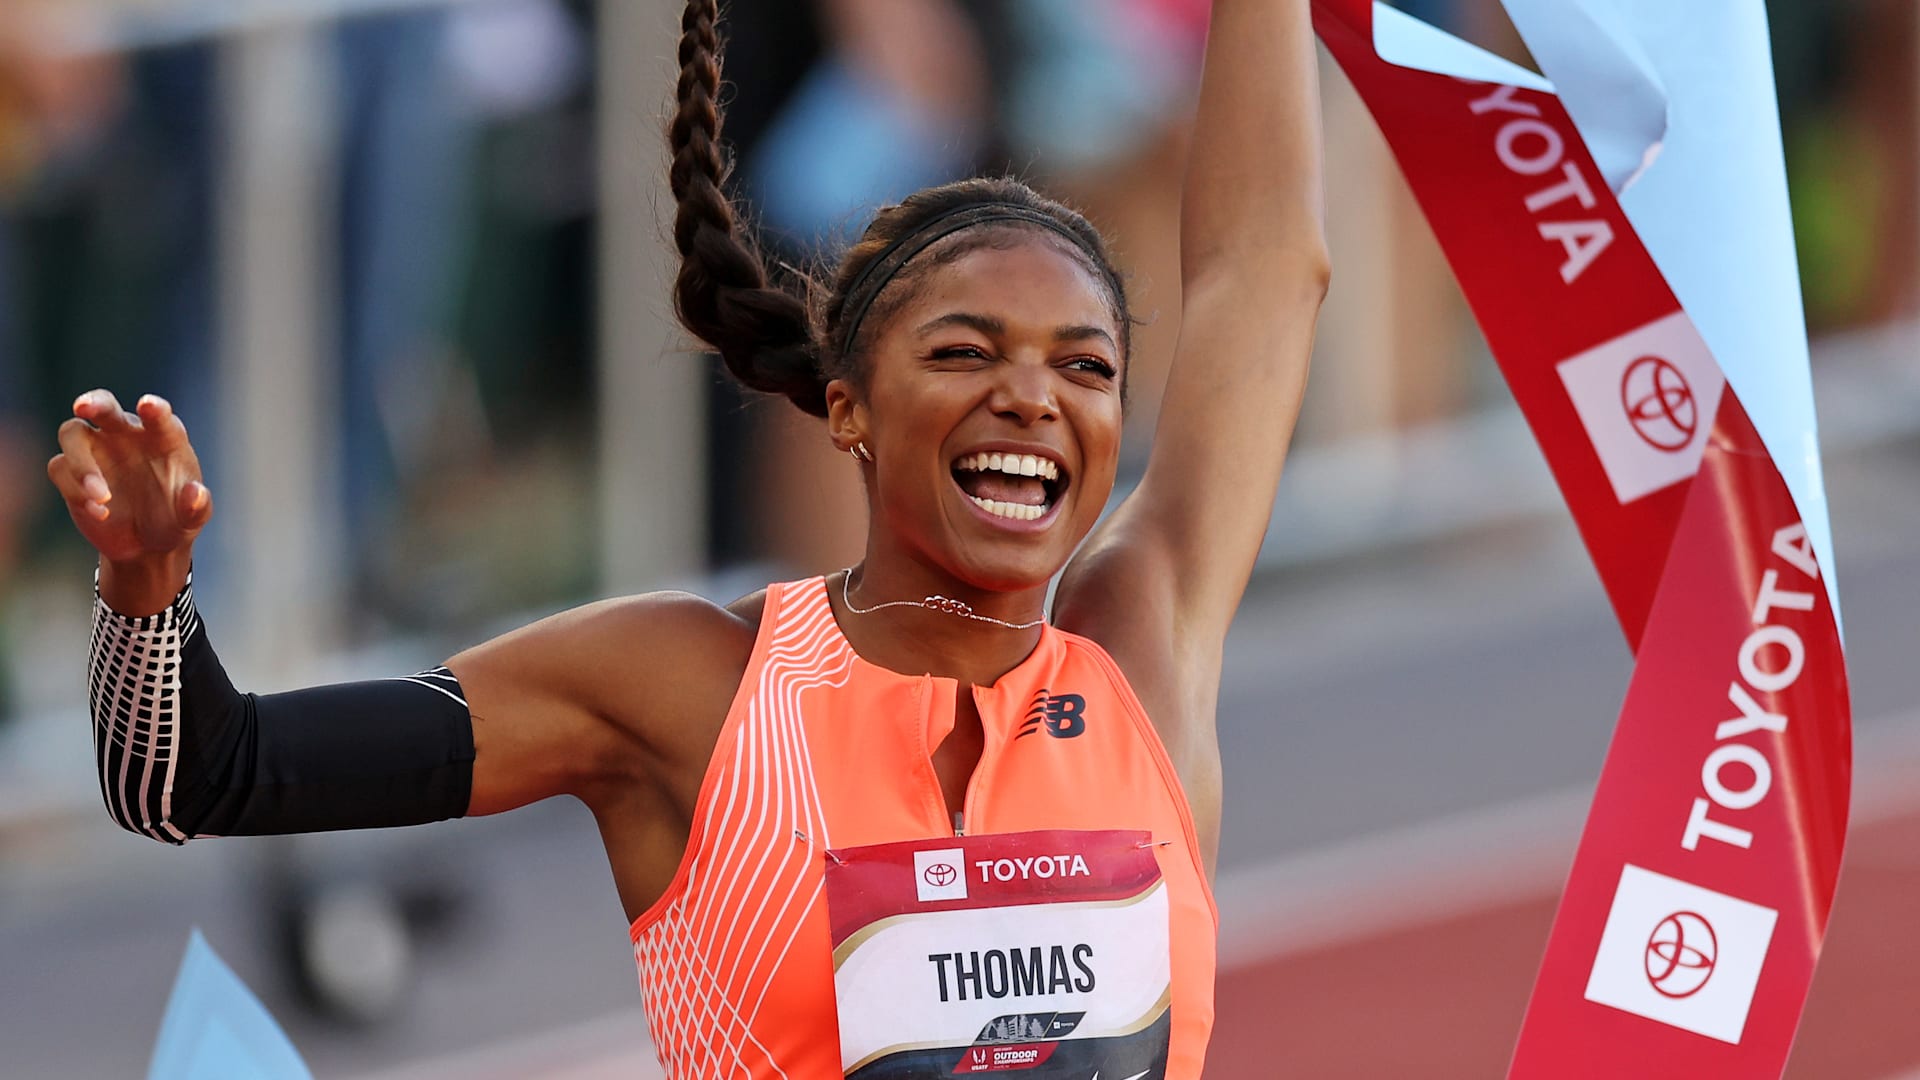 Olympic Track Medalist Gabby Thomas